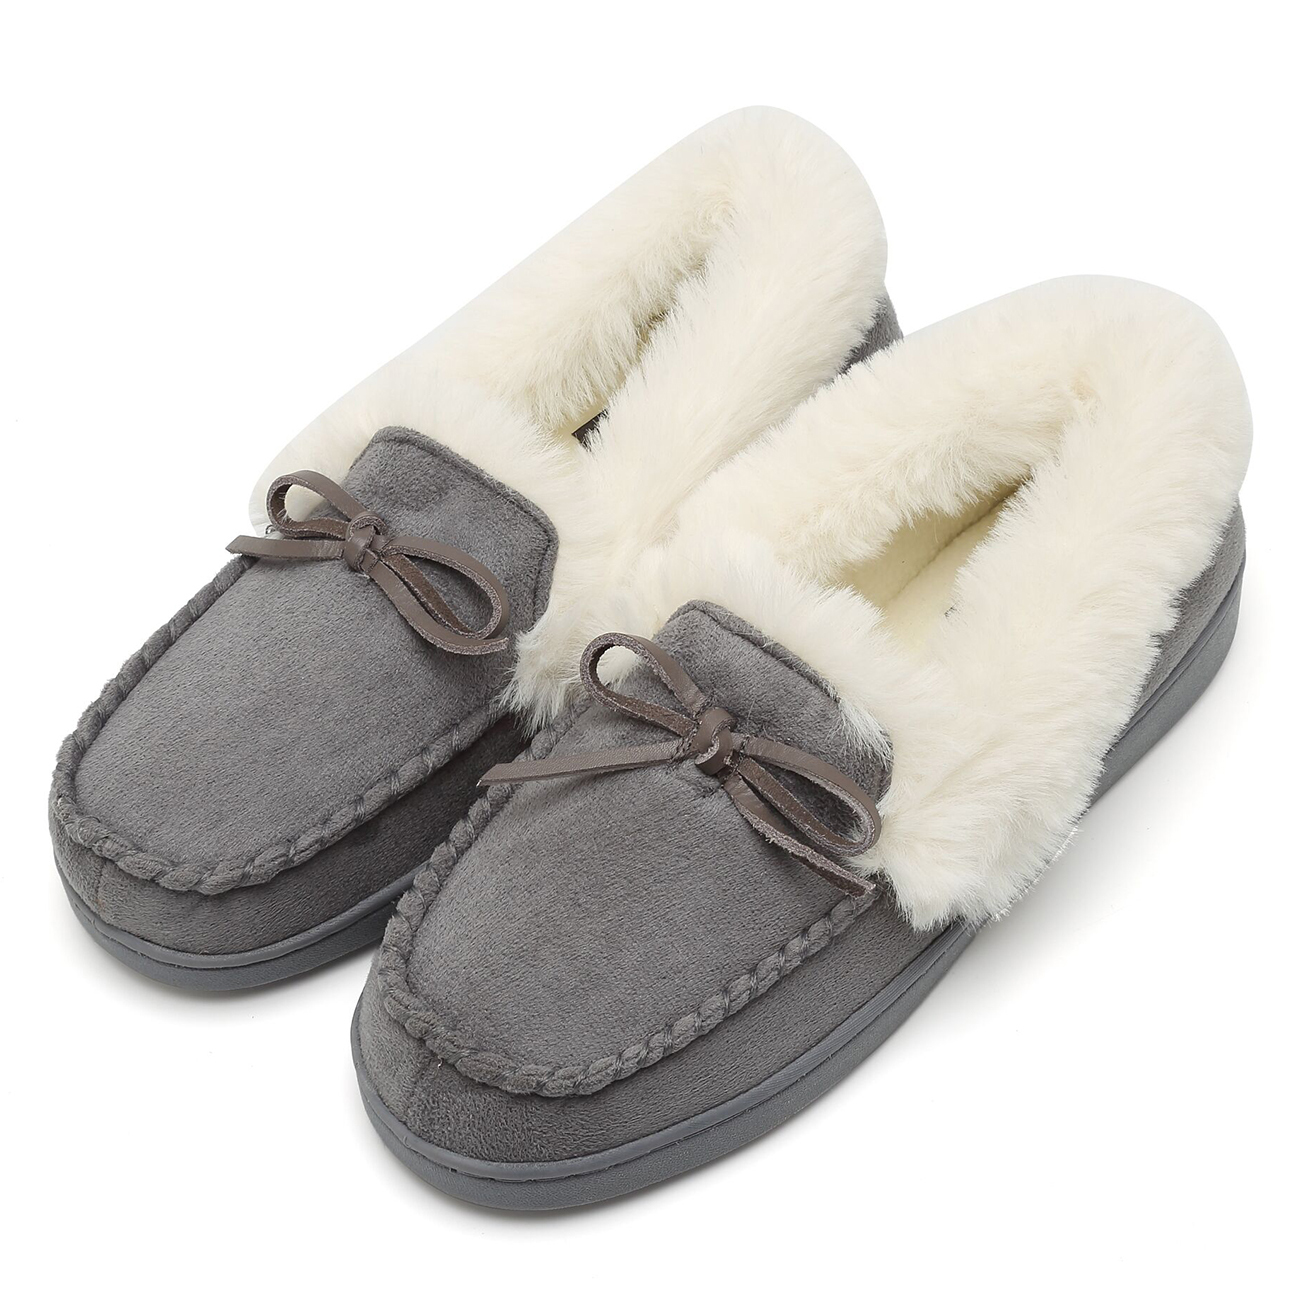 mens winter house slippers